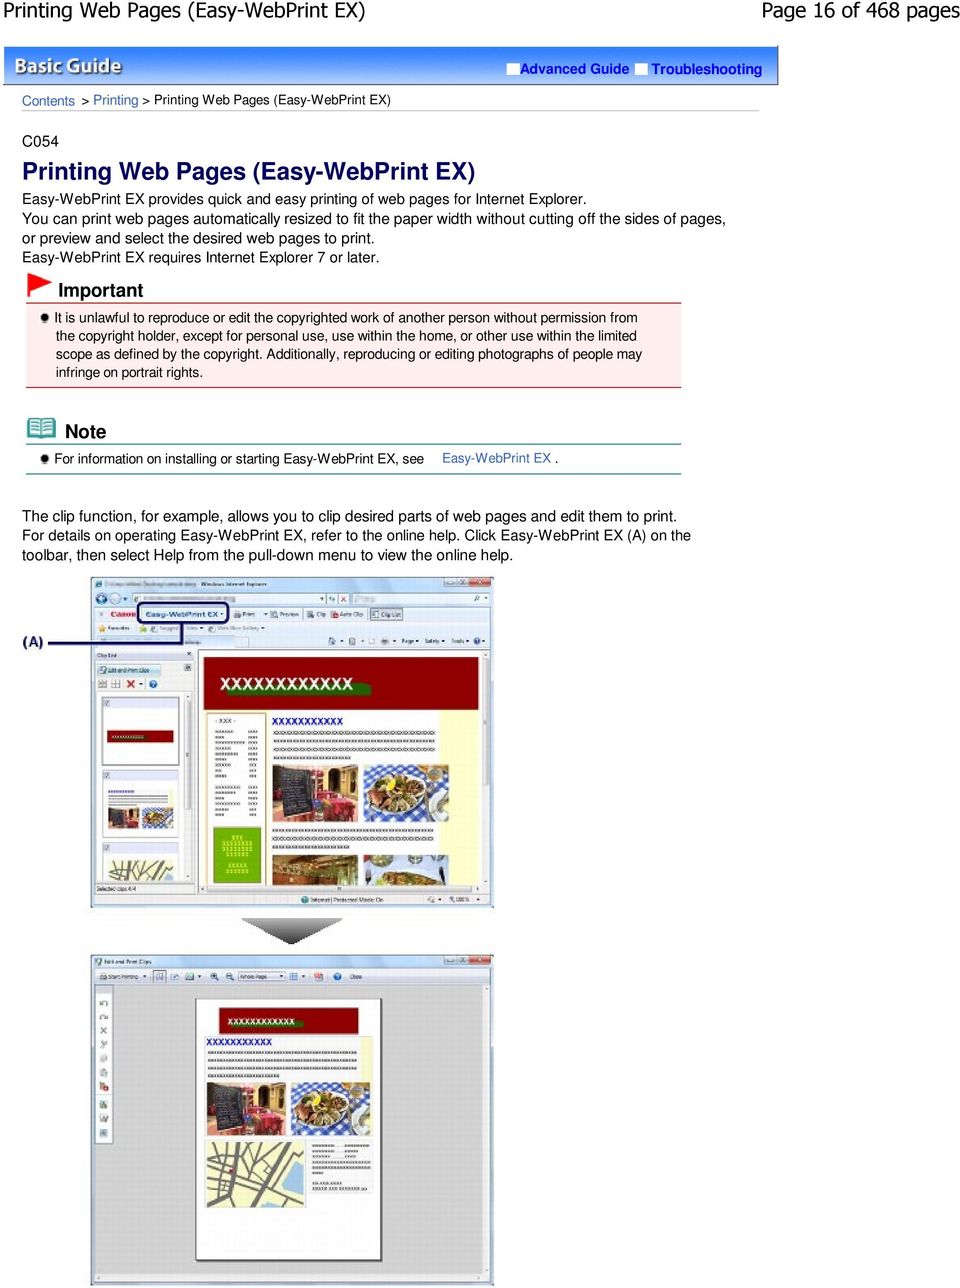 easy webprint ex windows